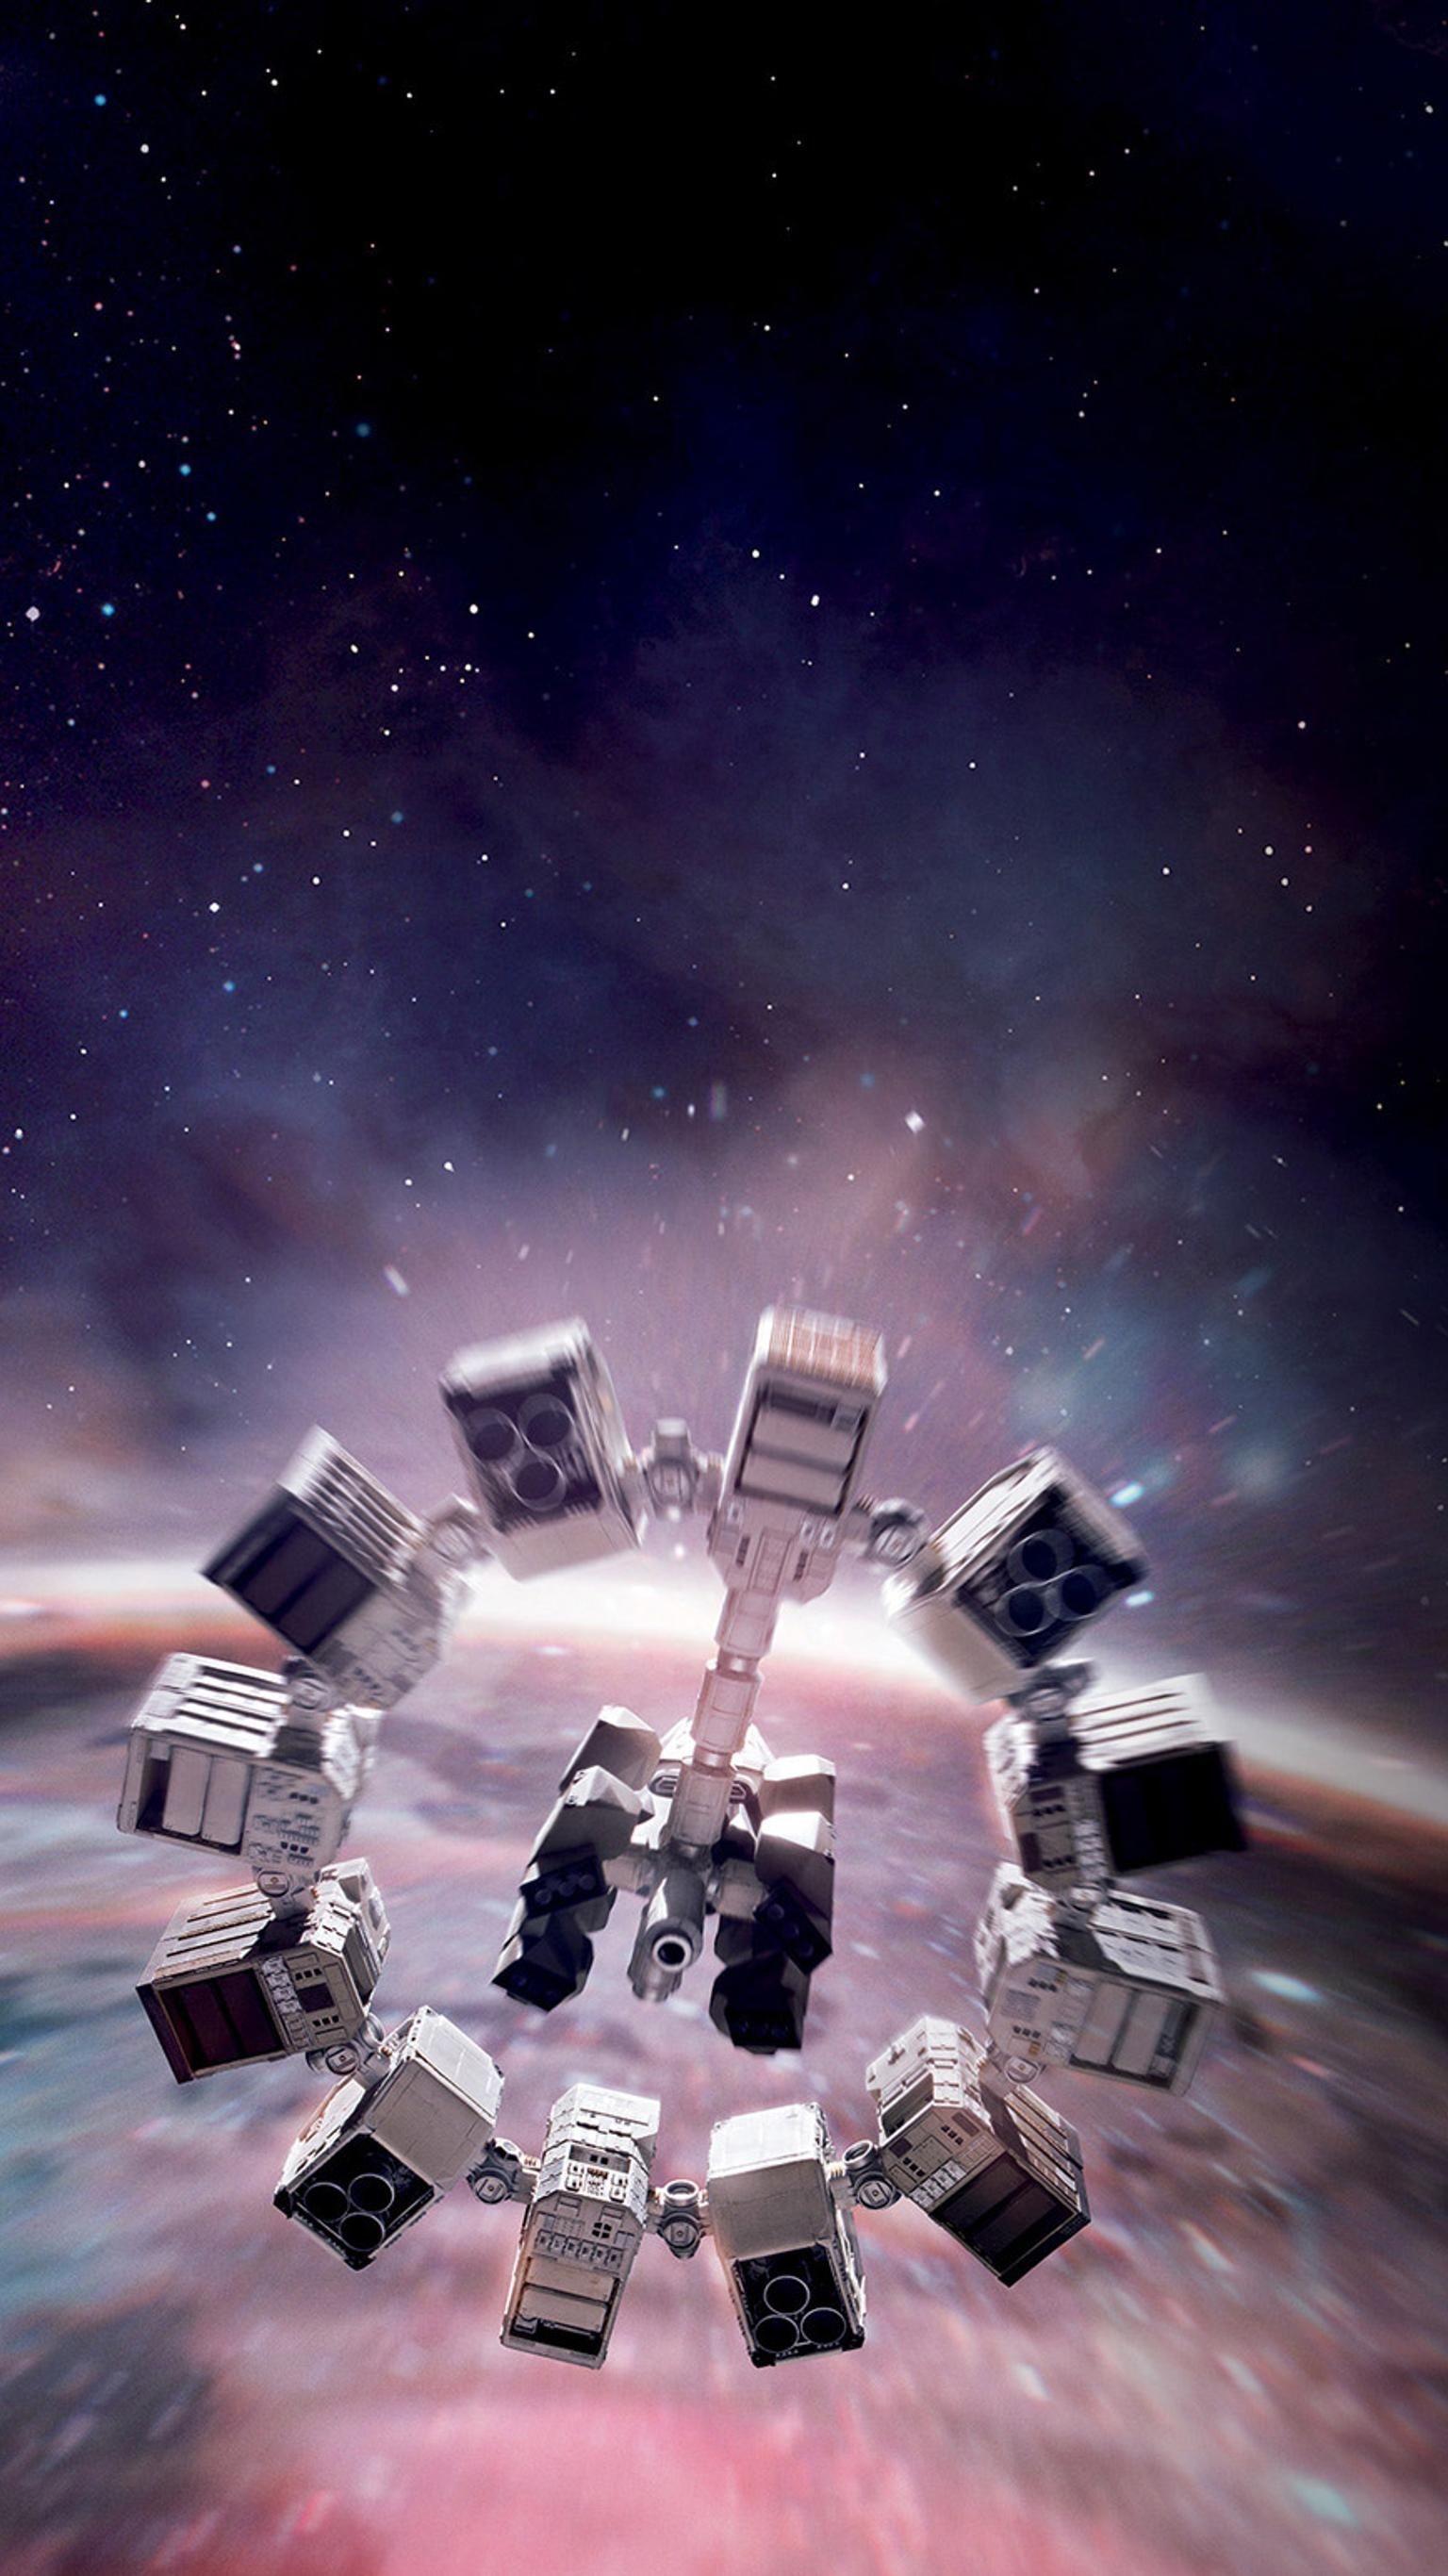 Interstellar: Endurance, Rotating wheel space station. 1540x2740 HD Wallpaper.